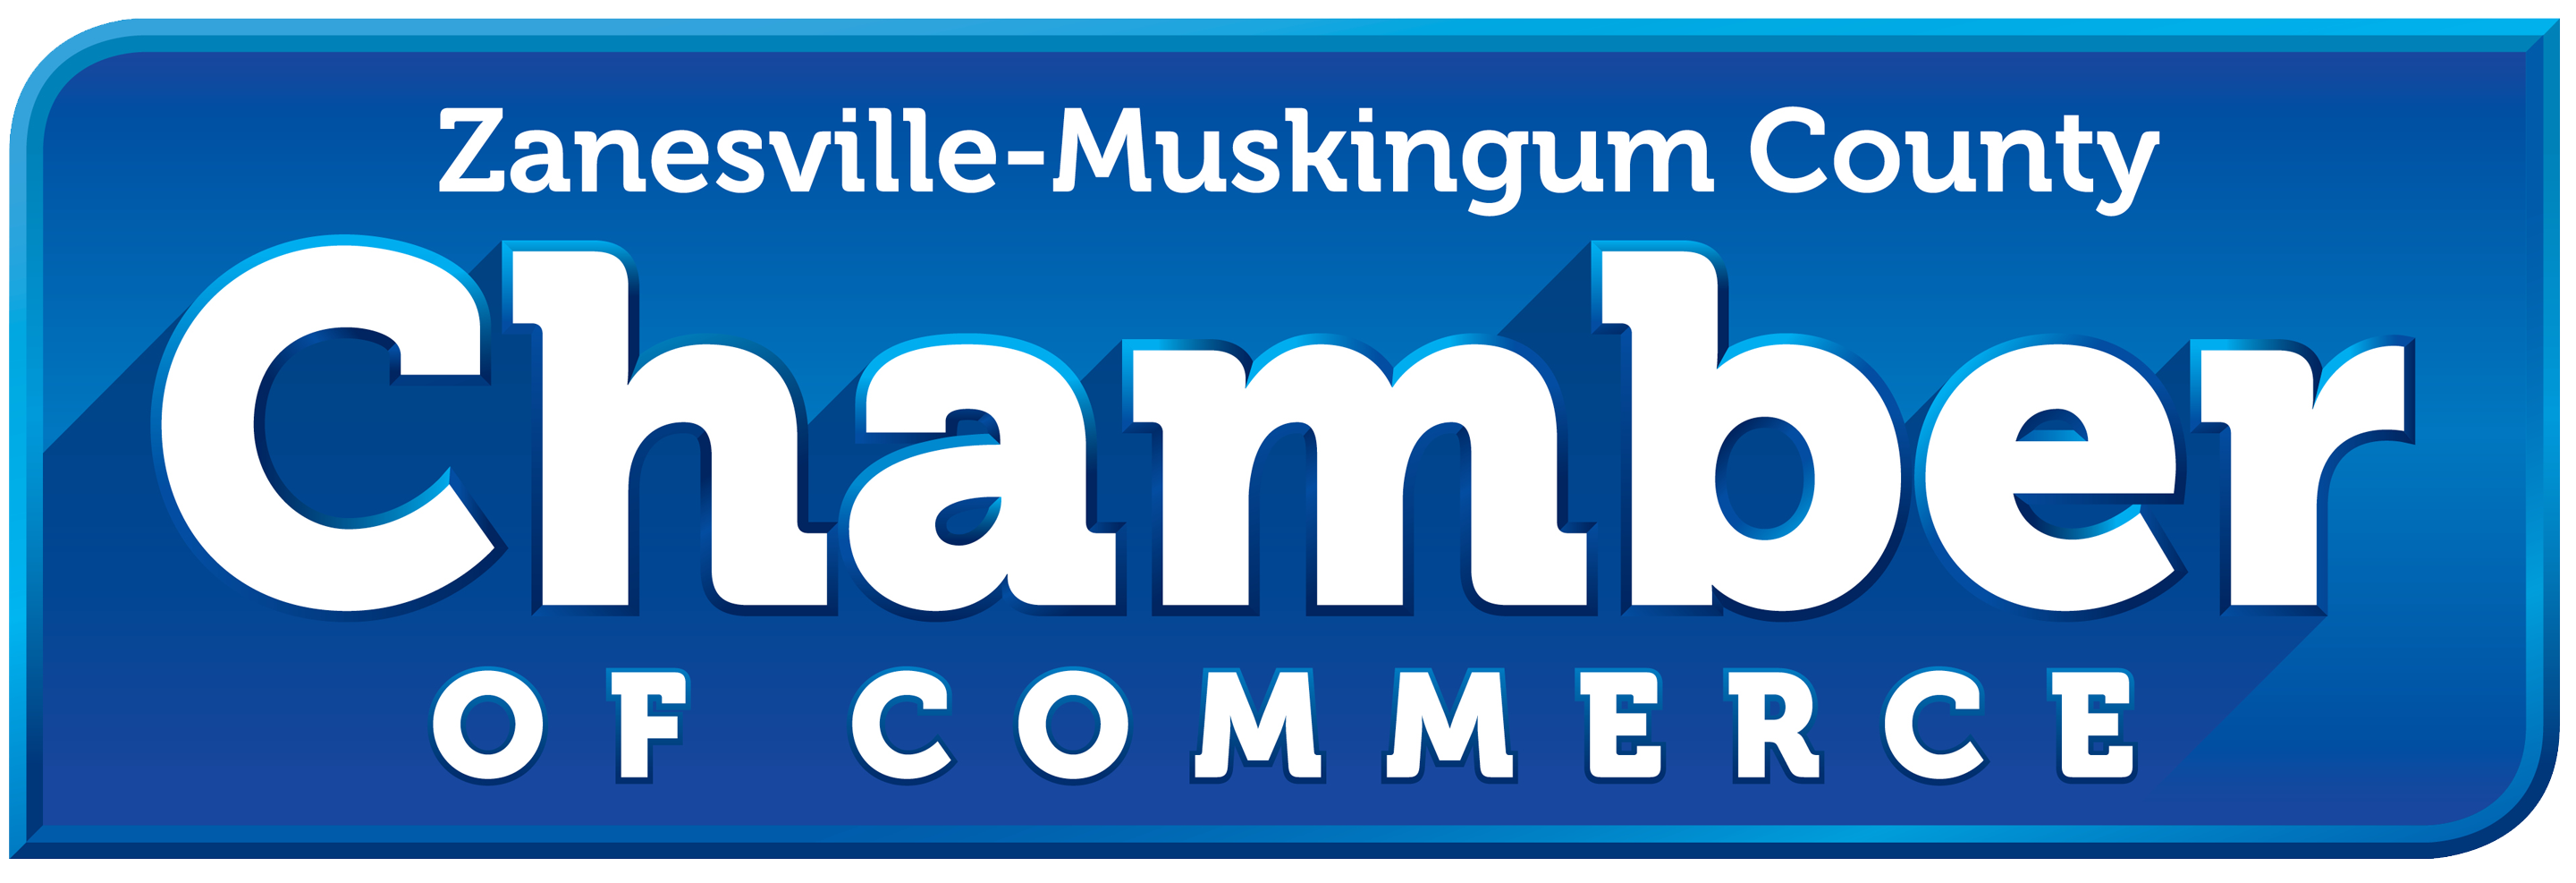 Zanesville-Muskingum County Chamber of Commerce member logo